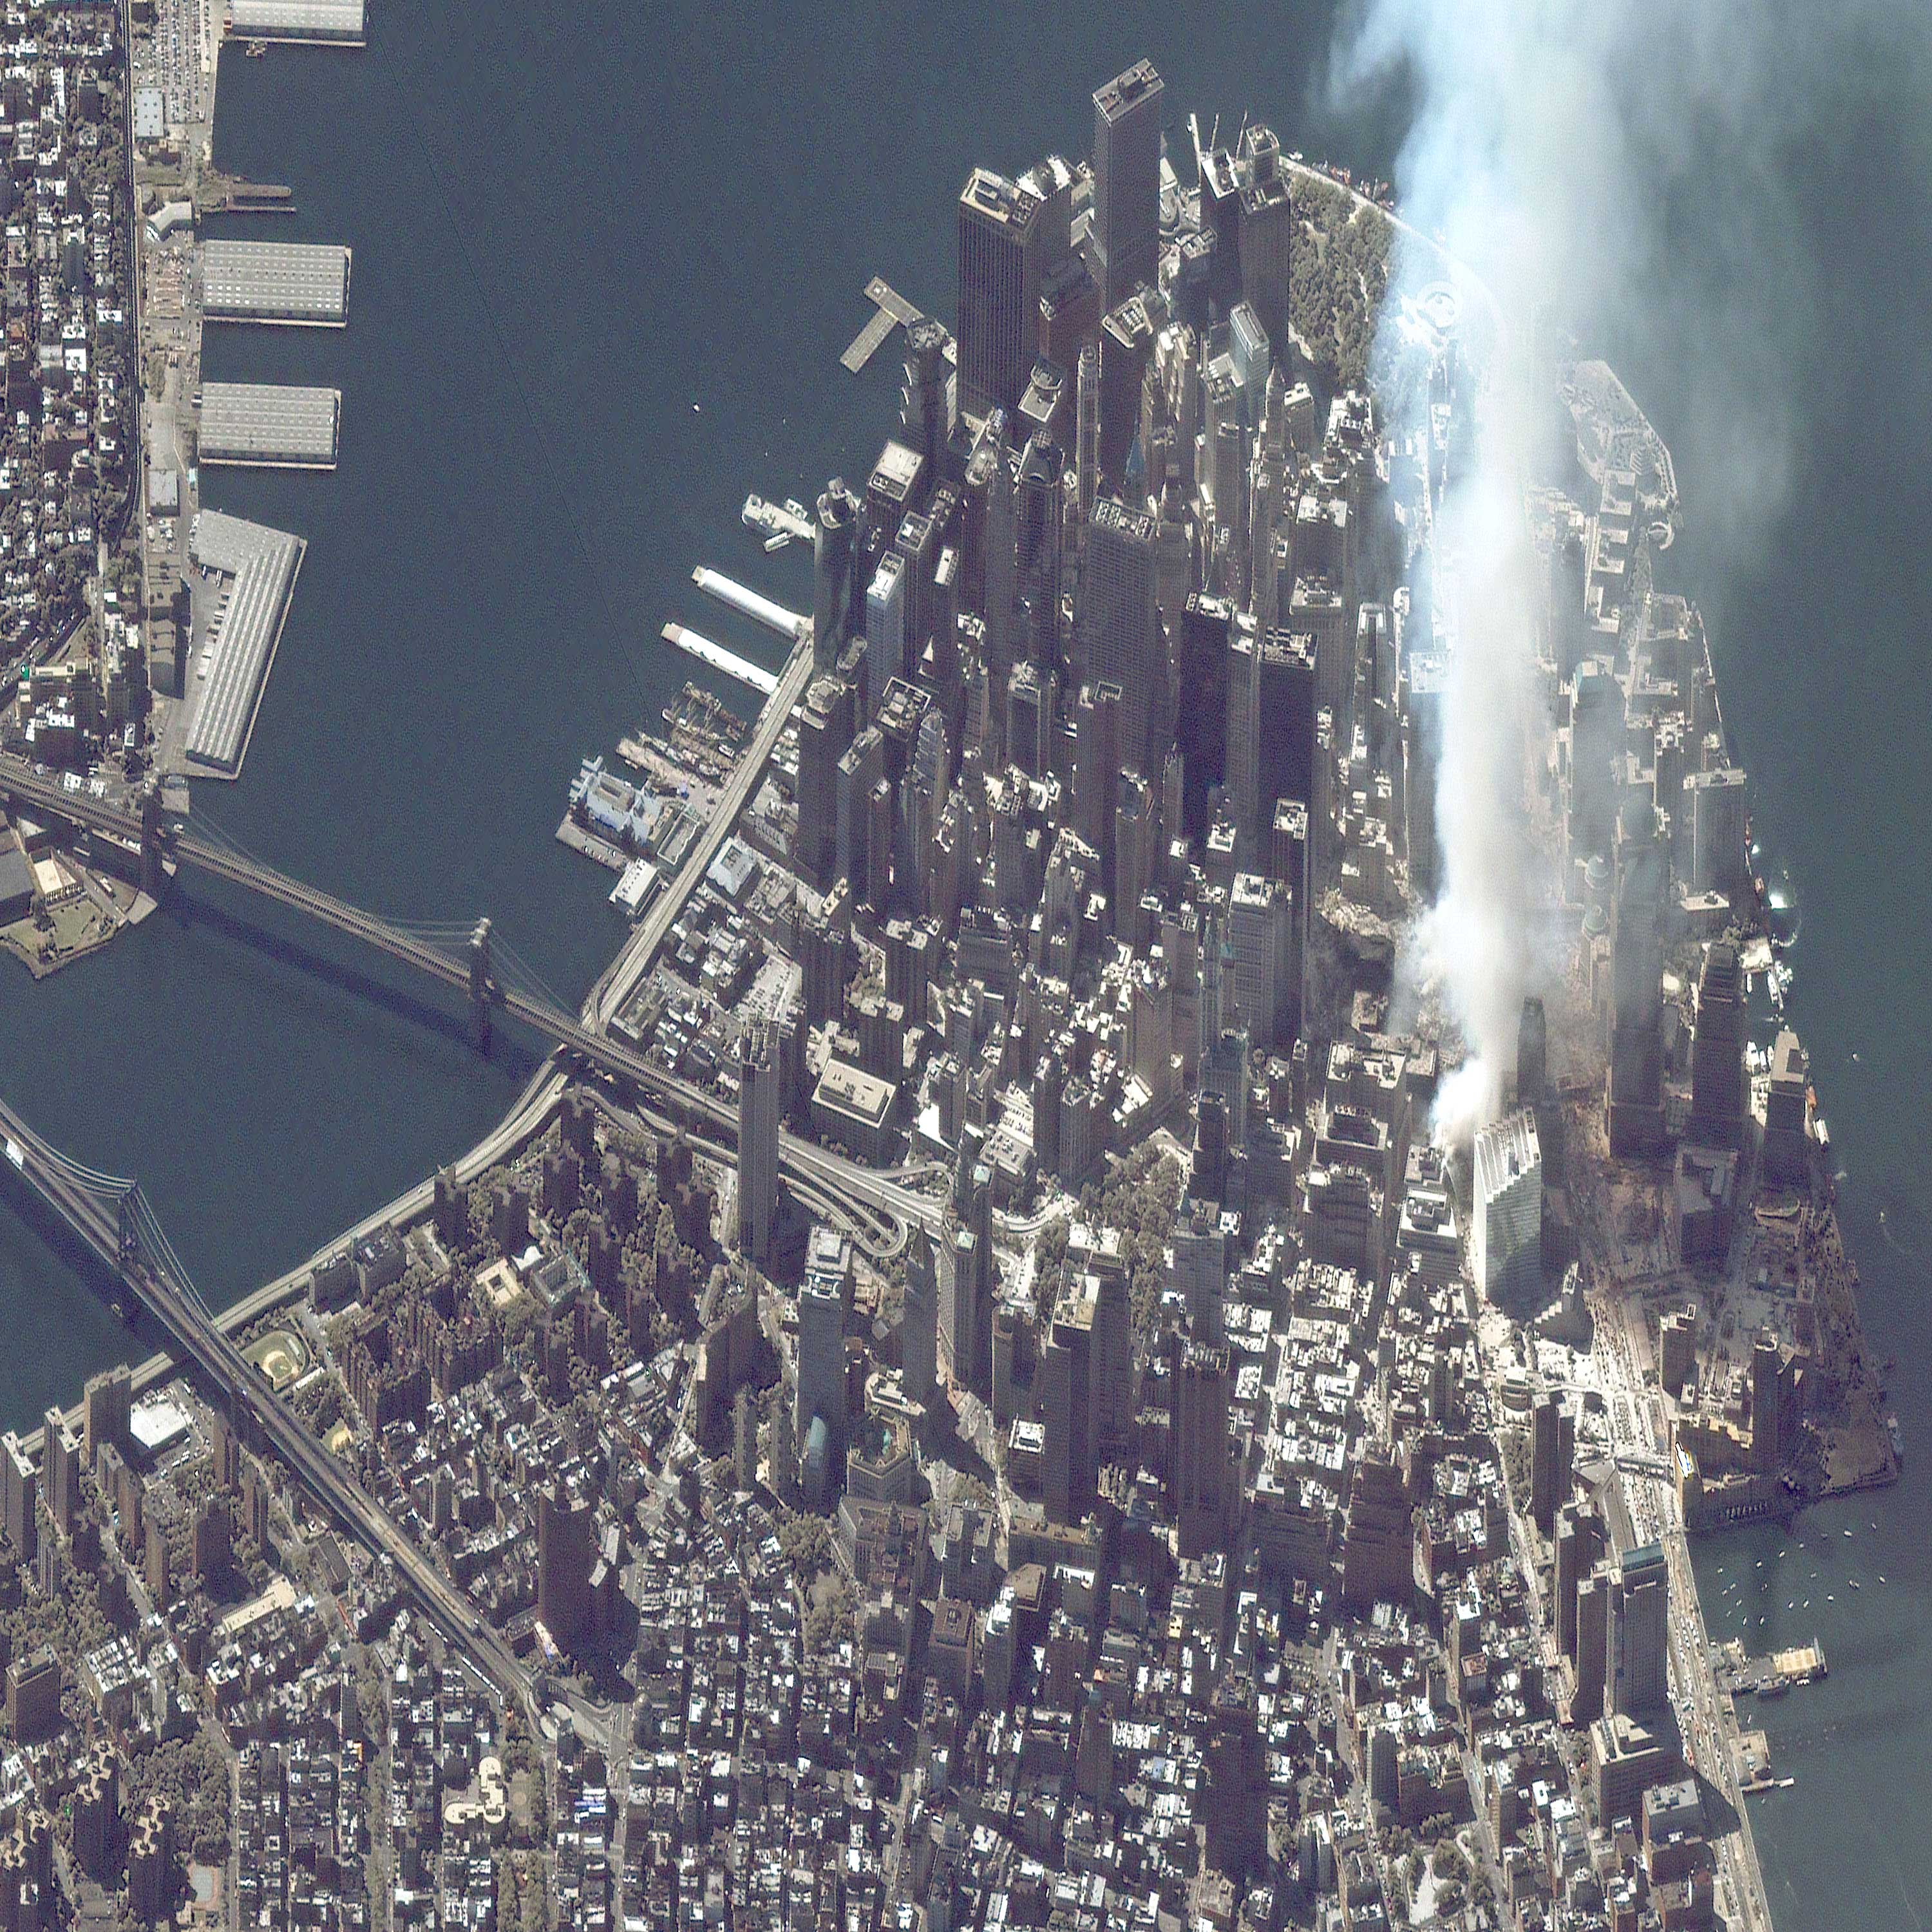 7 августа 2001 год. Нью-Йорк, Манхэттен, 11 сентября 2001 года. ВТЦ Нью-Йорк башни Близнецы. Нью Йорк из космоса 11 сентября 2001. ВТЦ Нью-Йорк 2020.